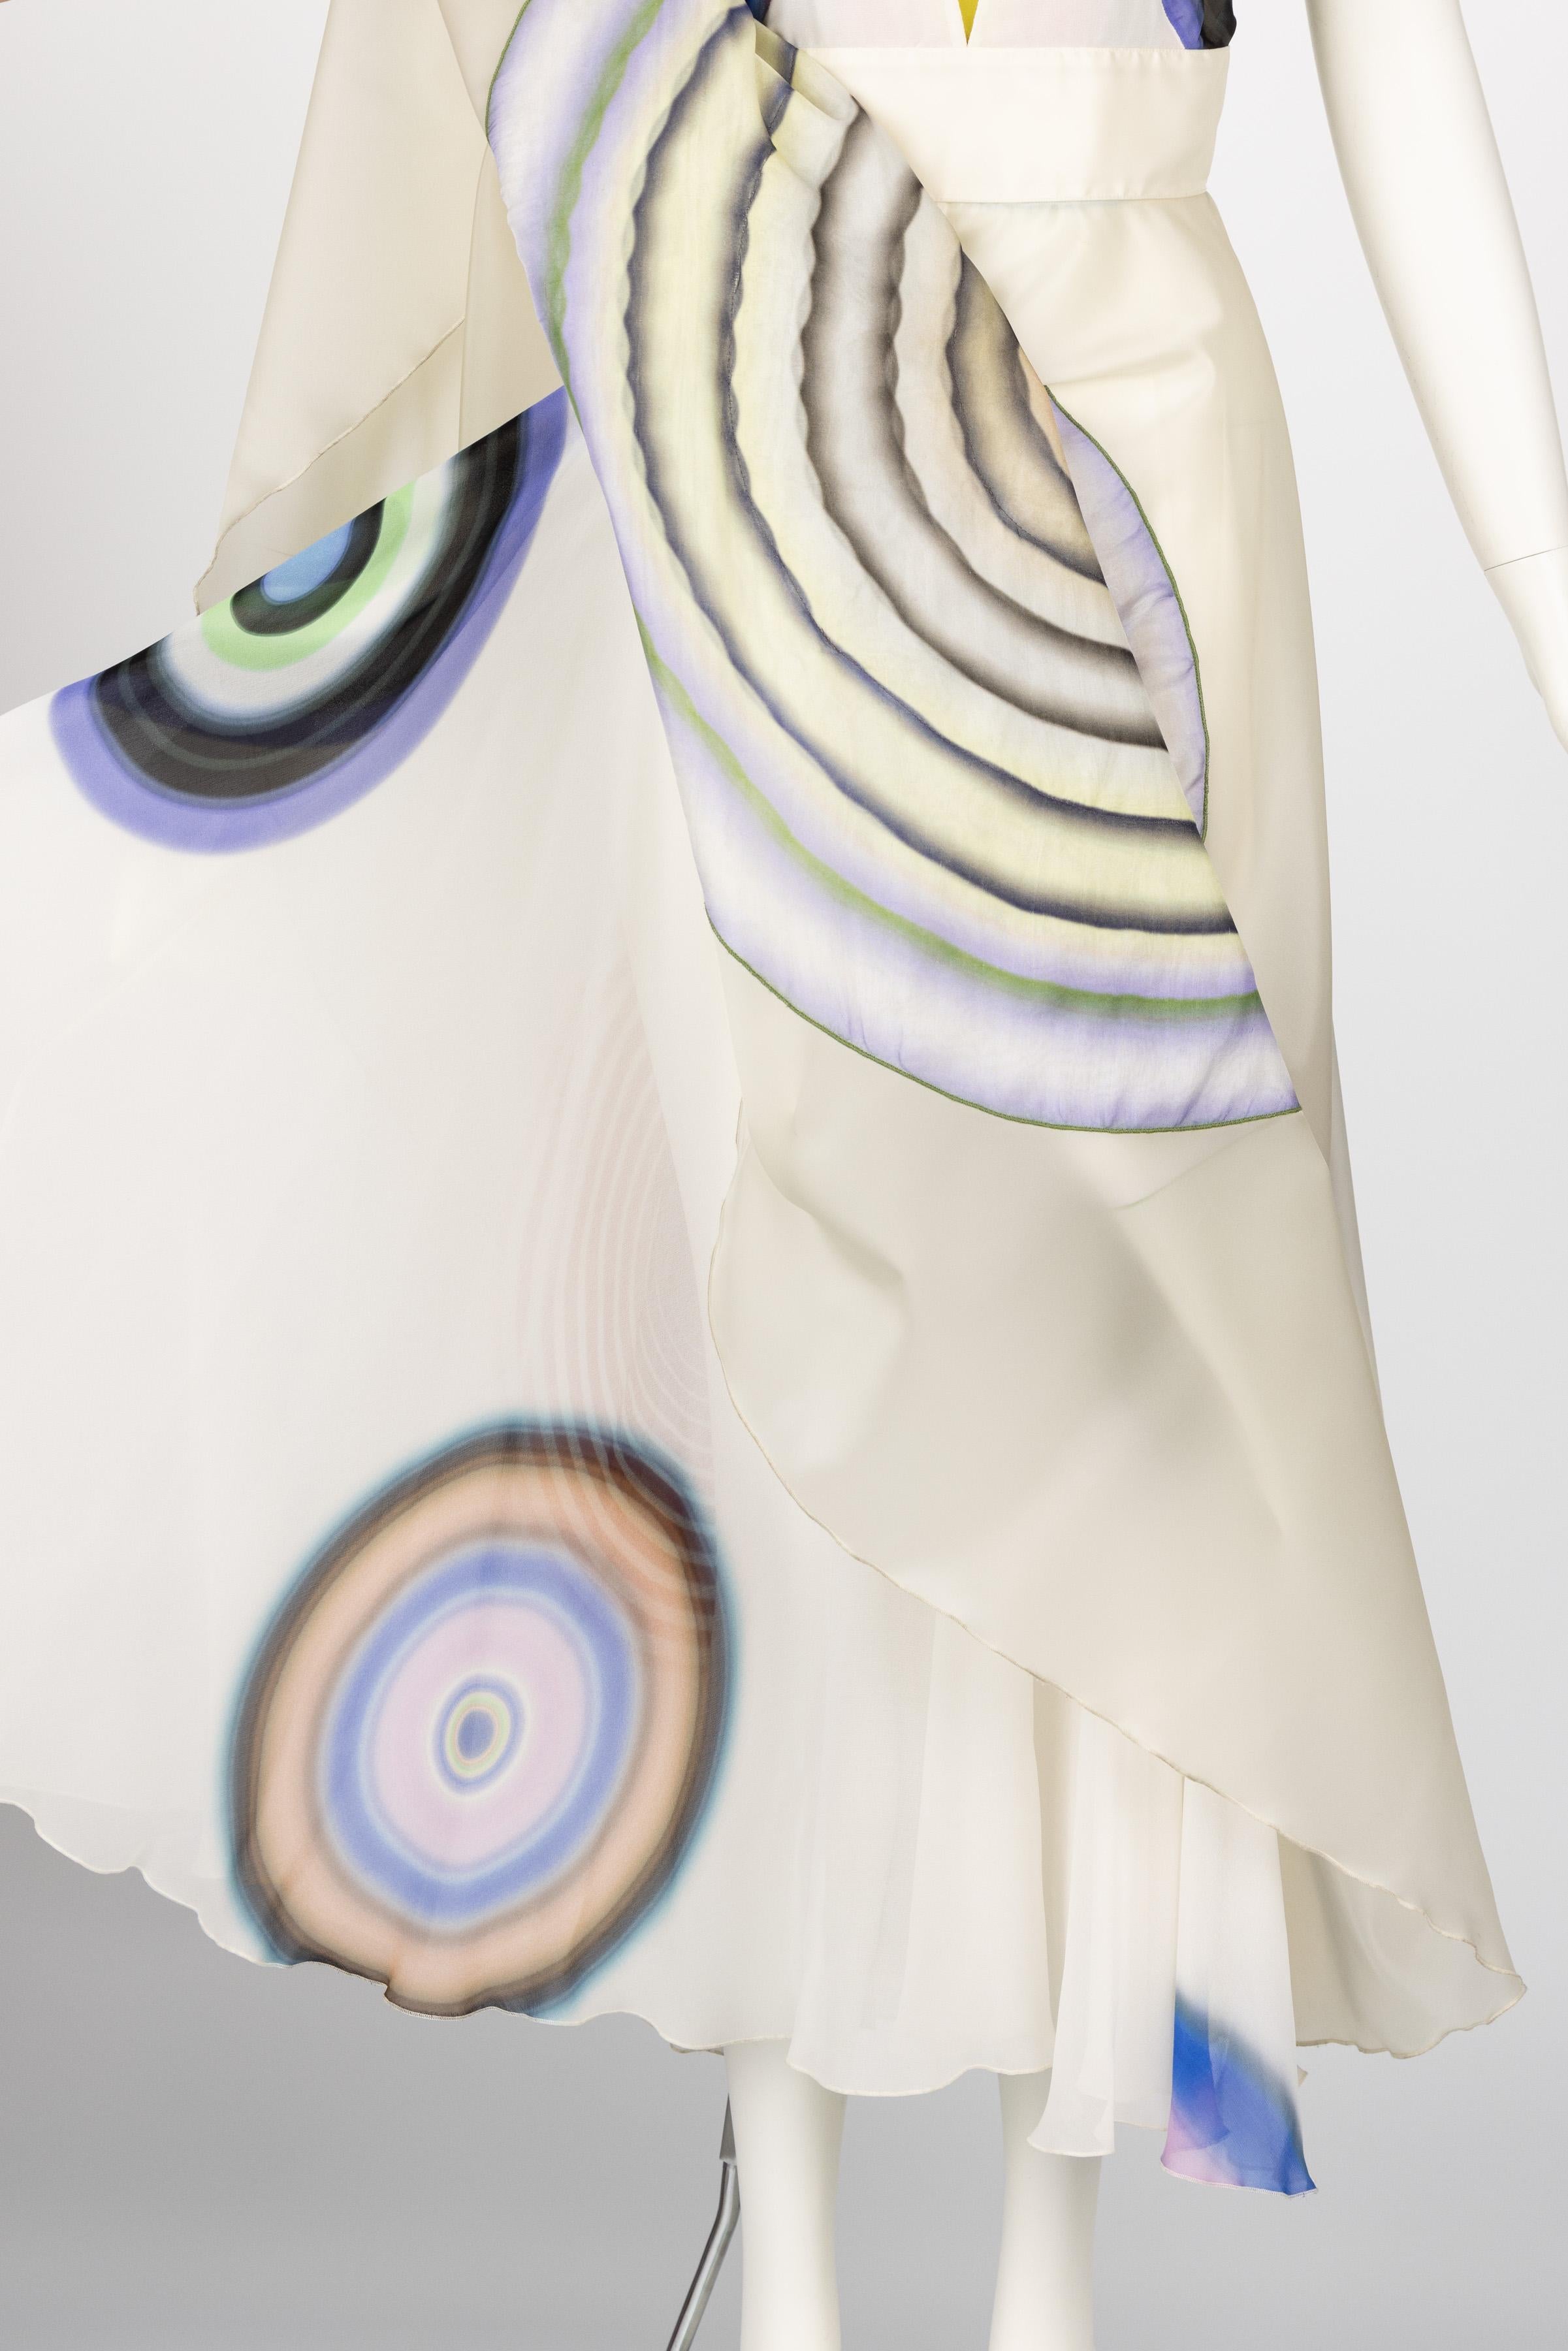 Fendi Karl Lagerfeld Silk Print Dress S/S 2008 Runway For Sale 4